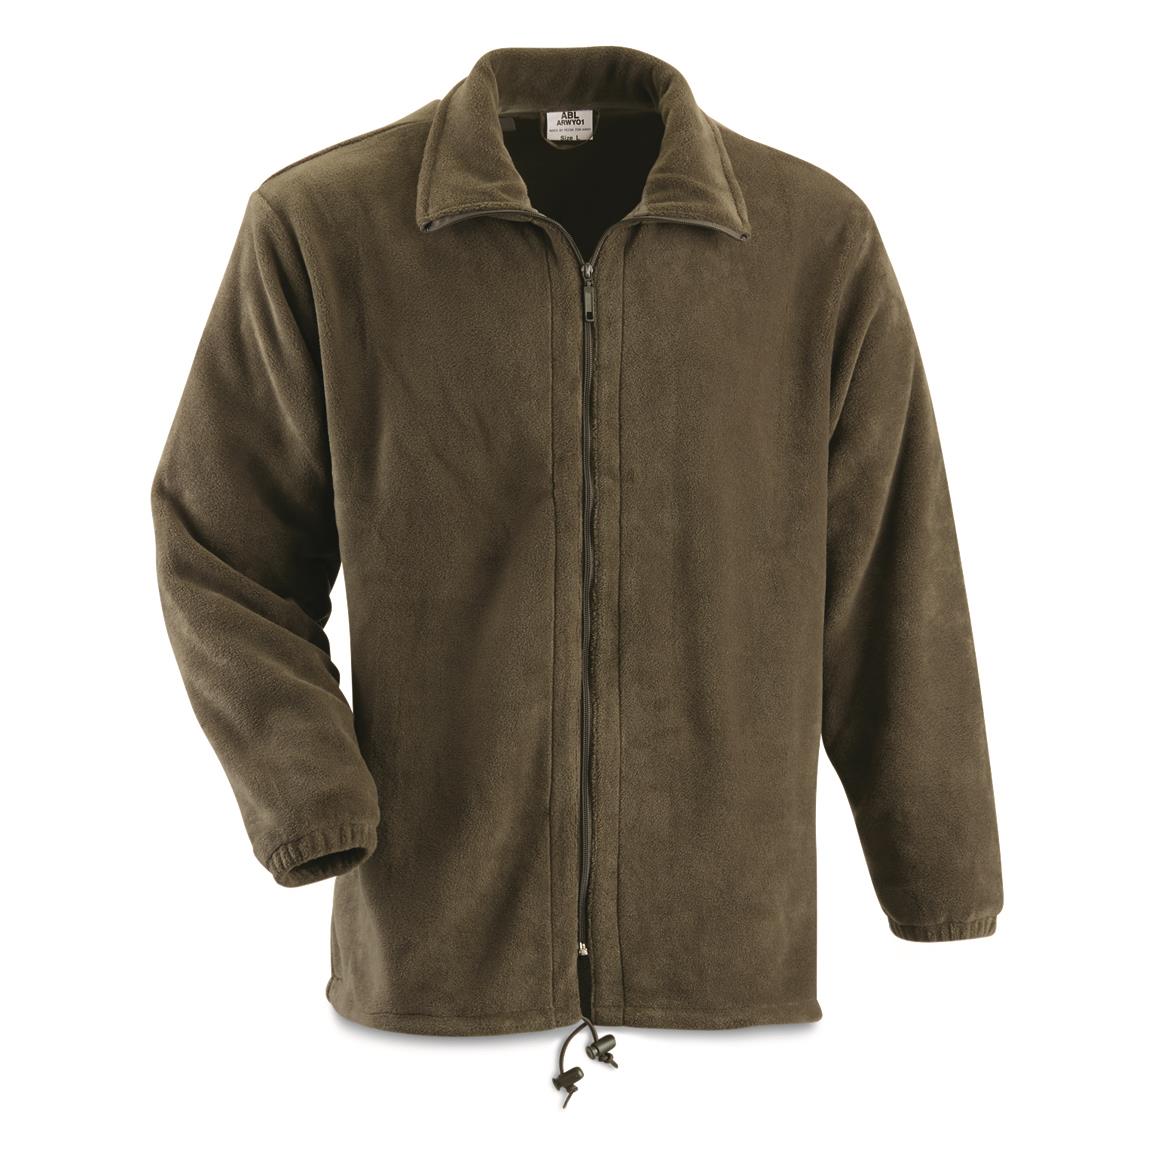 Belgian Military Surplus Heavyweight Fleece Jacket, New, Olive Drab